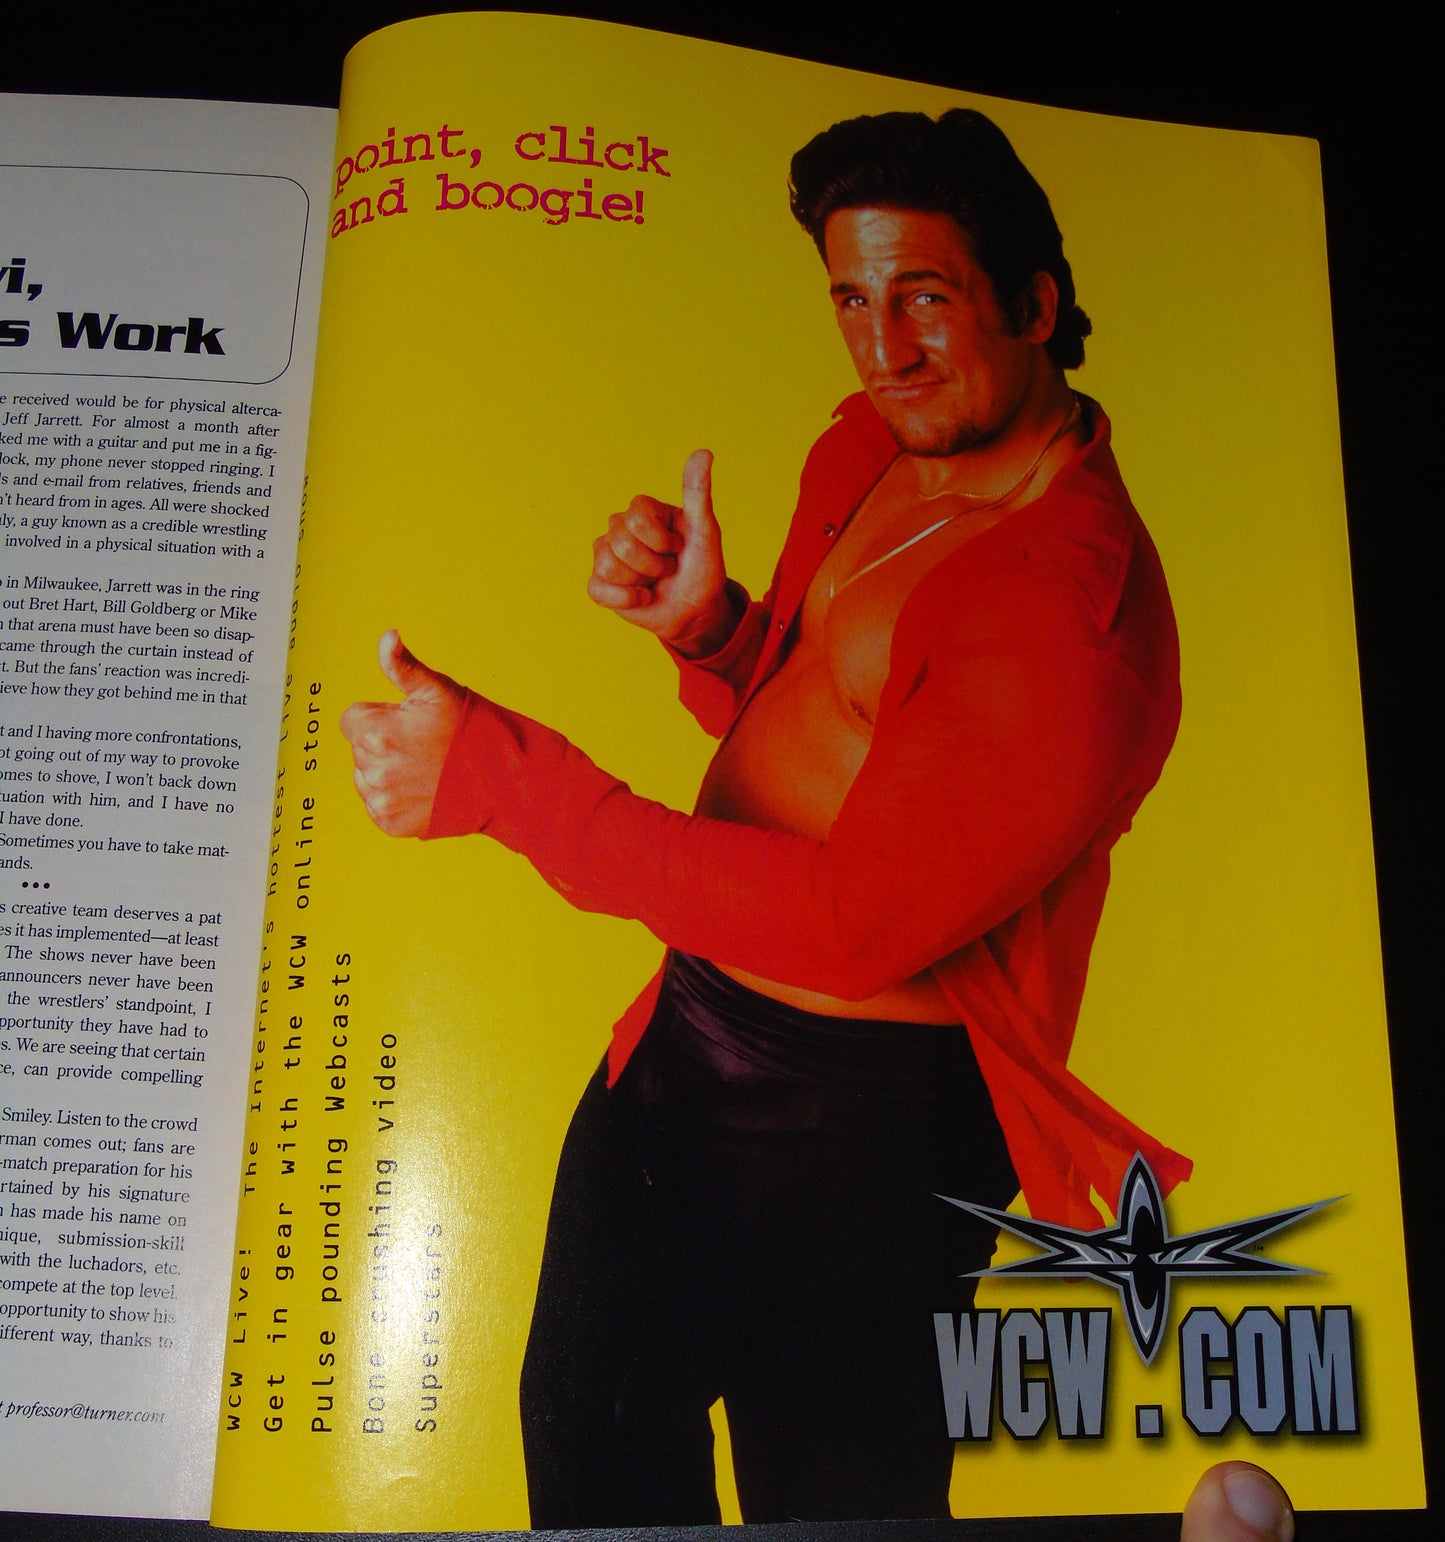 WCW Magazine Issue 59